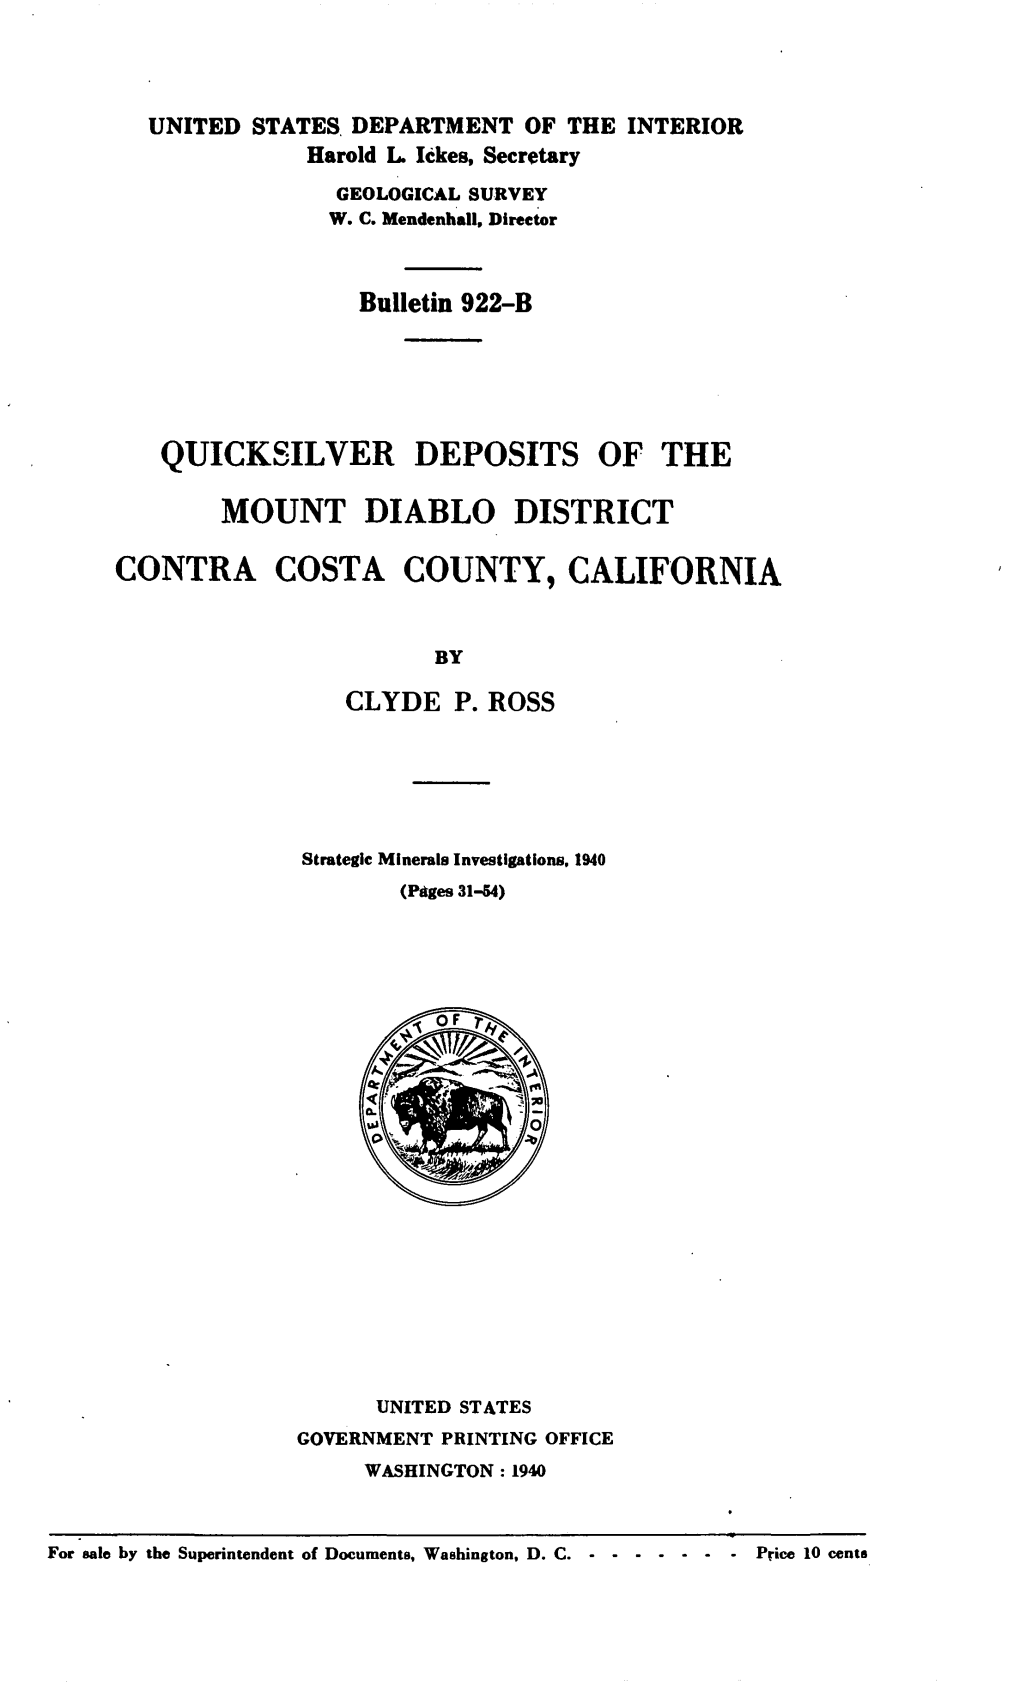 Quicksilver Deposits of the Mount Diablo District Contra Costa County, California